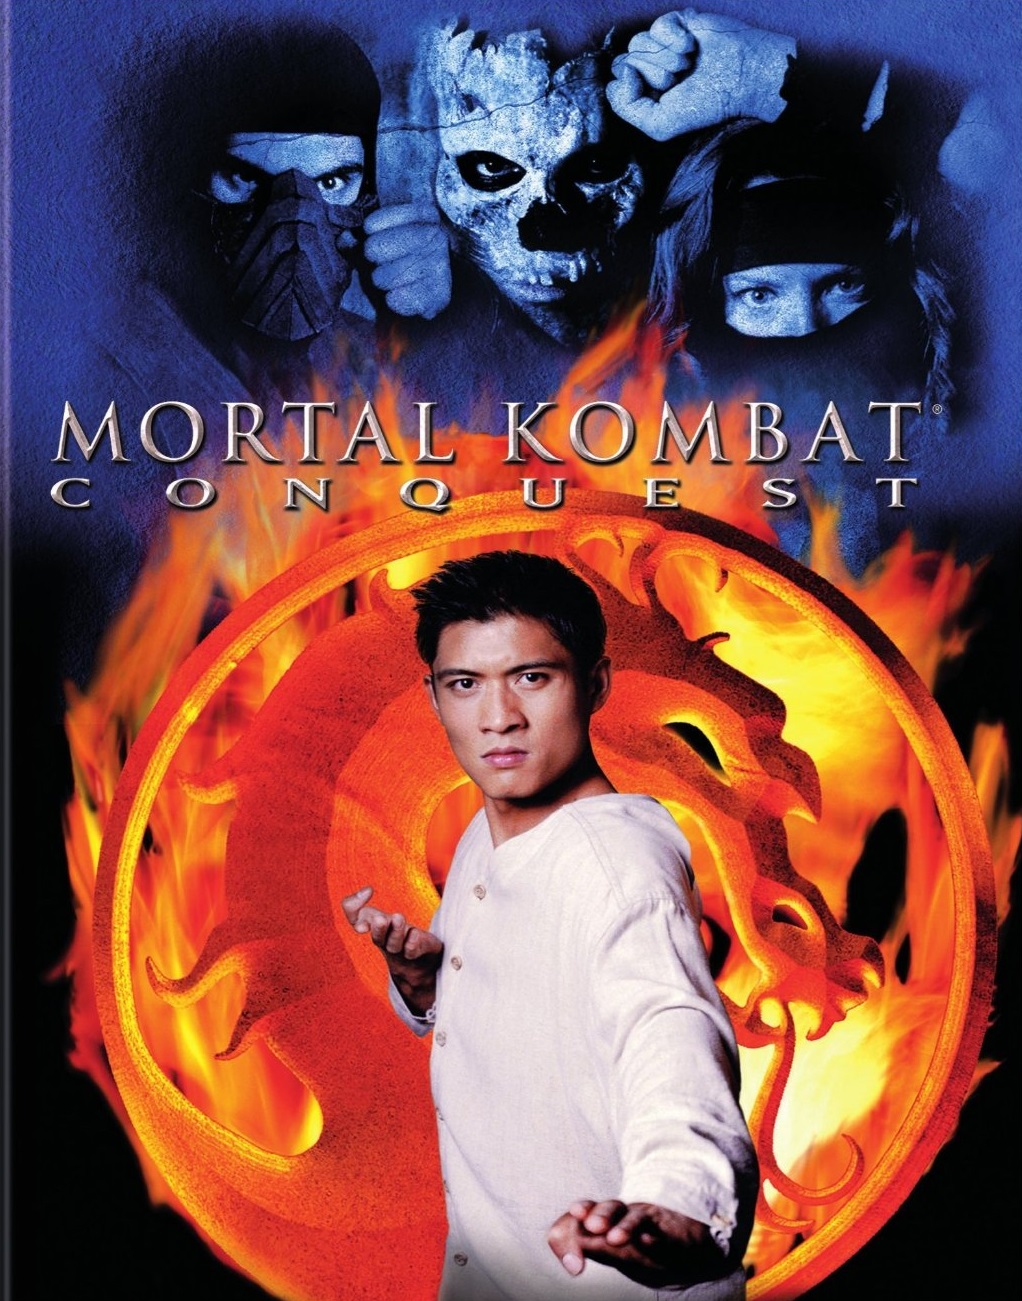 Mortal Kombat (1992 video game) - Wikipedia